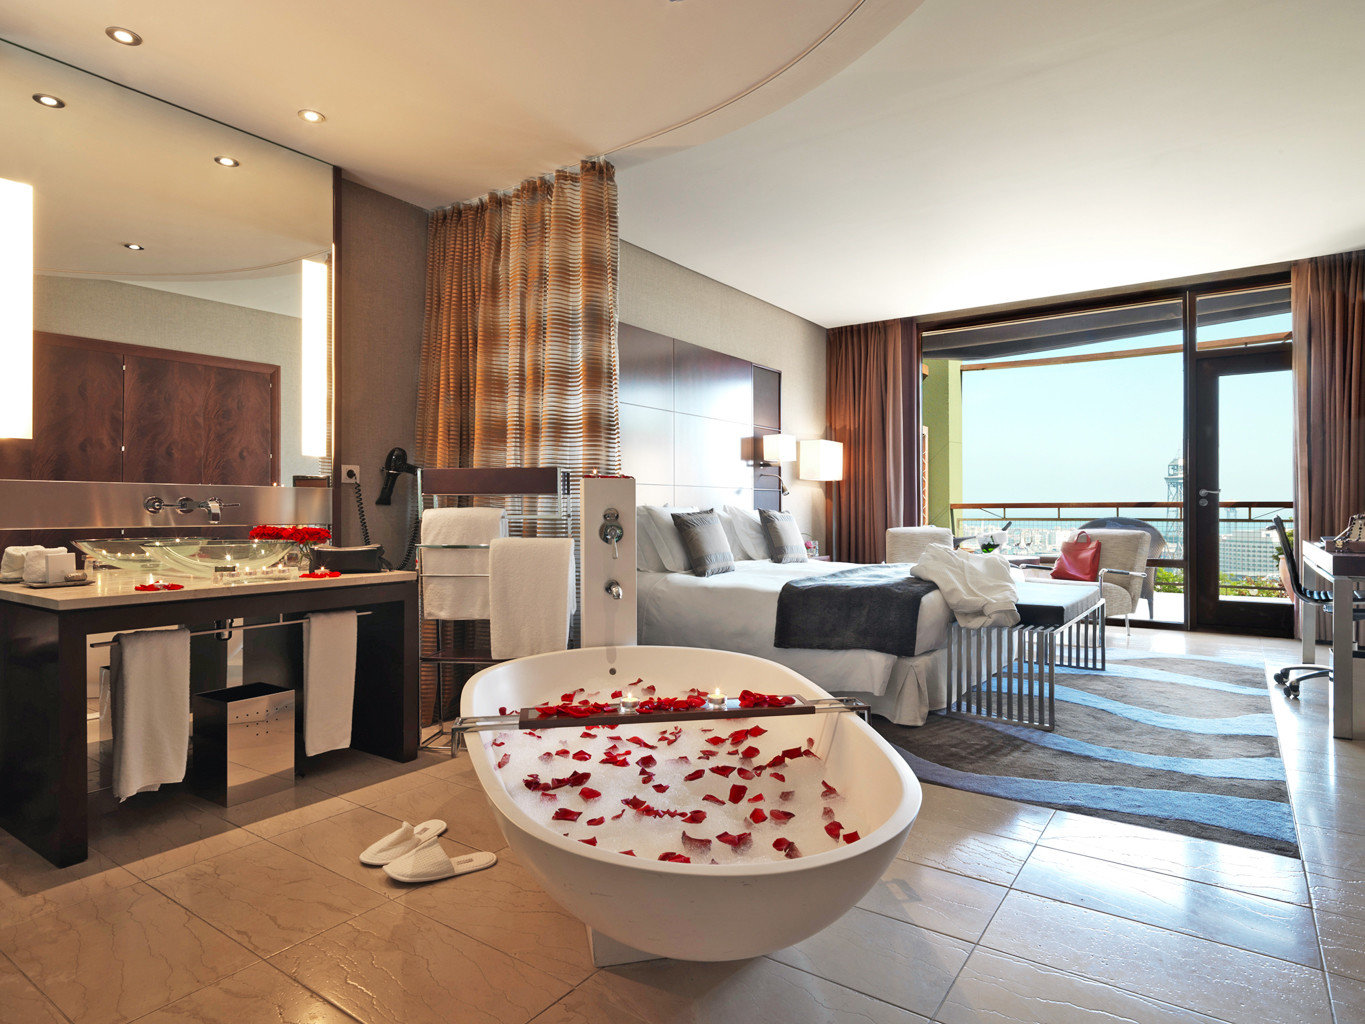 Bath Luxury Modern Romantic Scenic views property home house living room Kitchen condominium Suite cottage